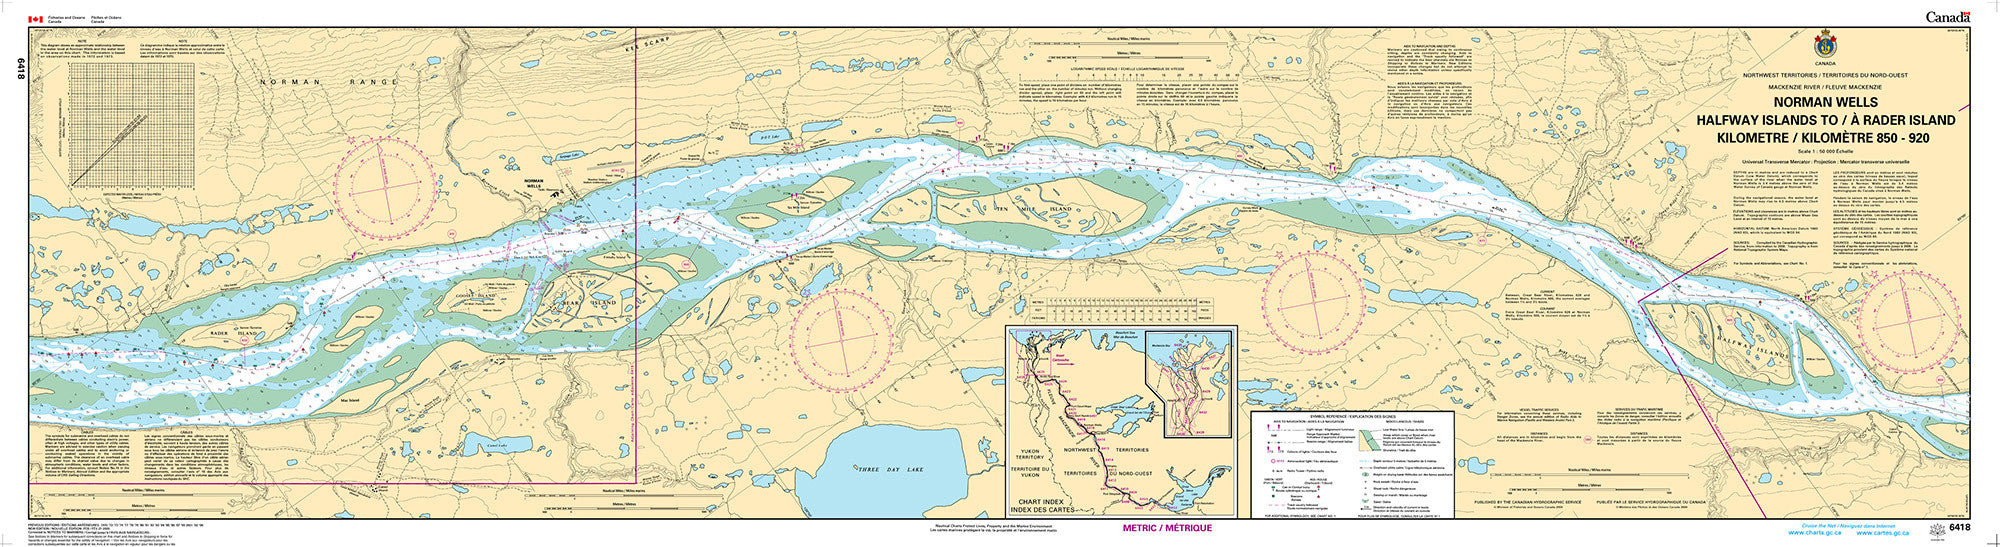 Canadian Hydrographic Service Nautical Chart CHS6418: Norman Wells, Halfway Islands to/à Rader Island Kilometre 850 / Kilomètre 920